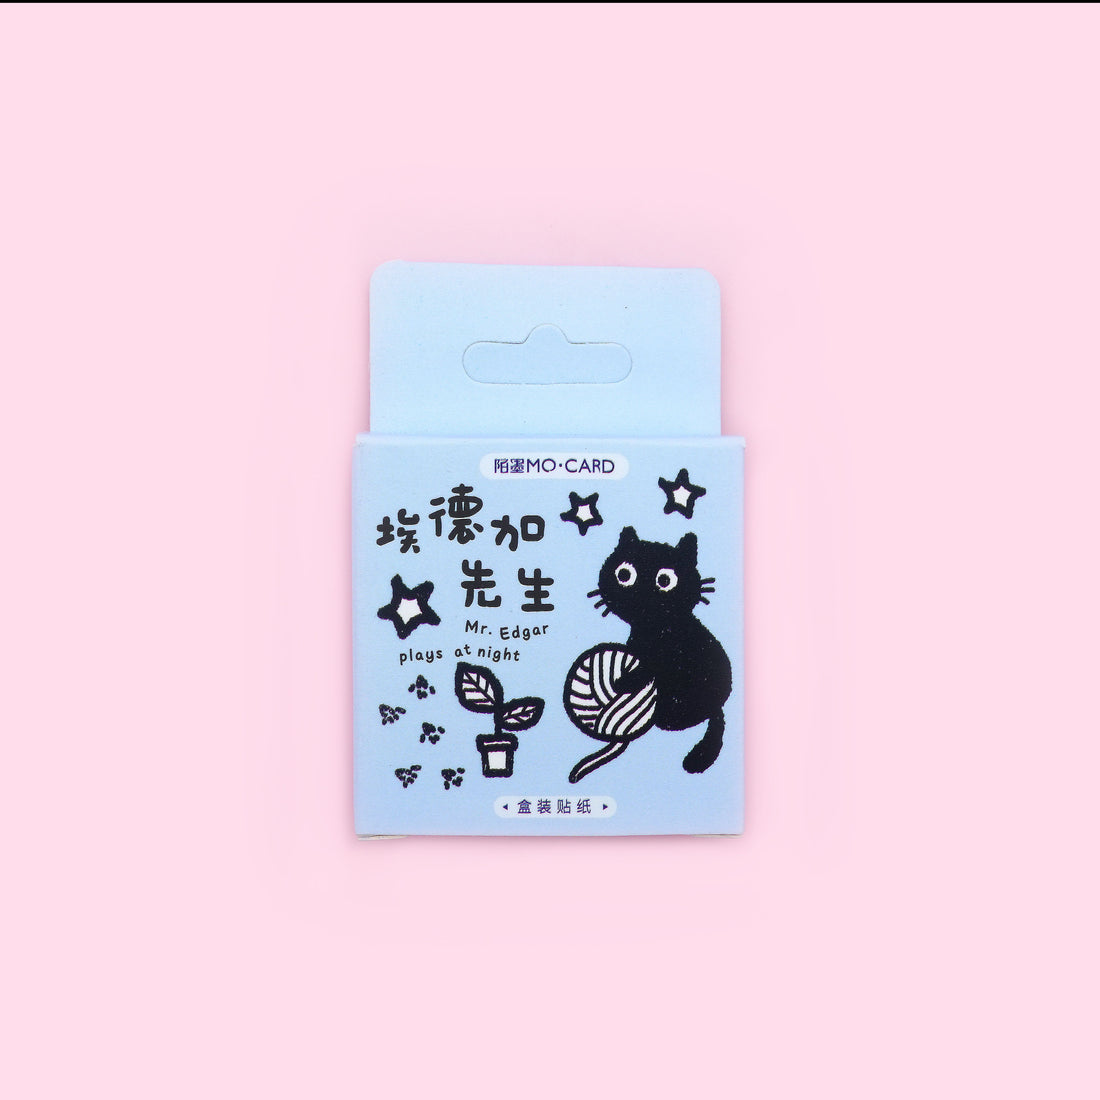 Small Mochi 50pcs Sticker Packs-Candy Shack – Oliospark